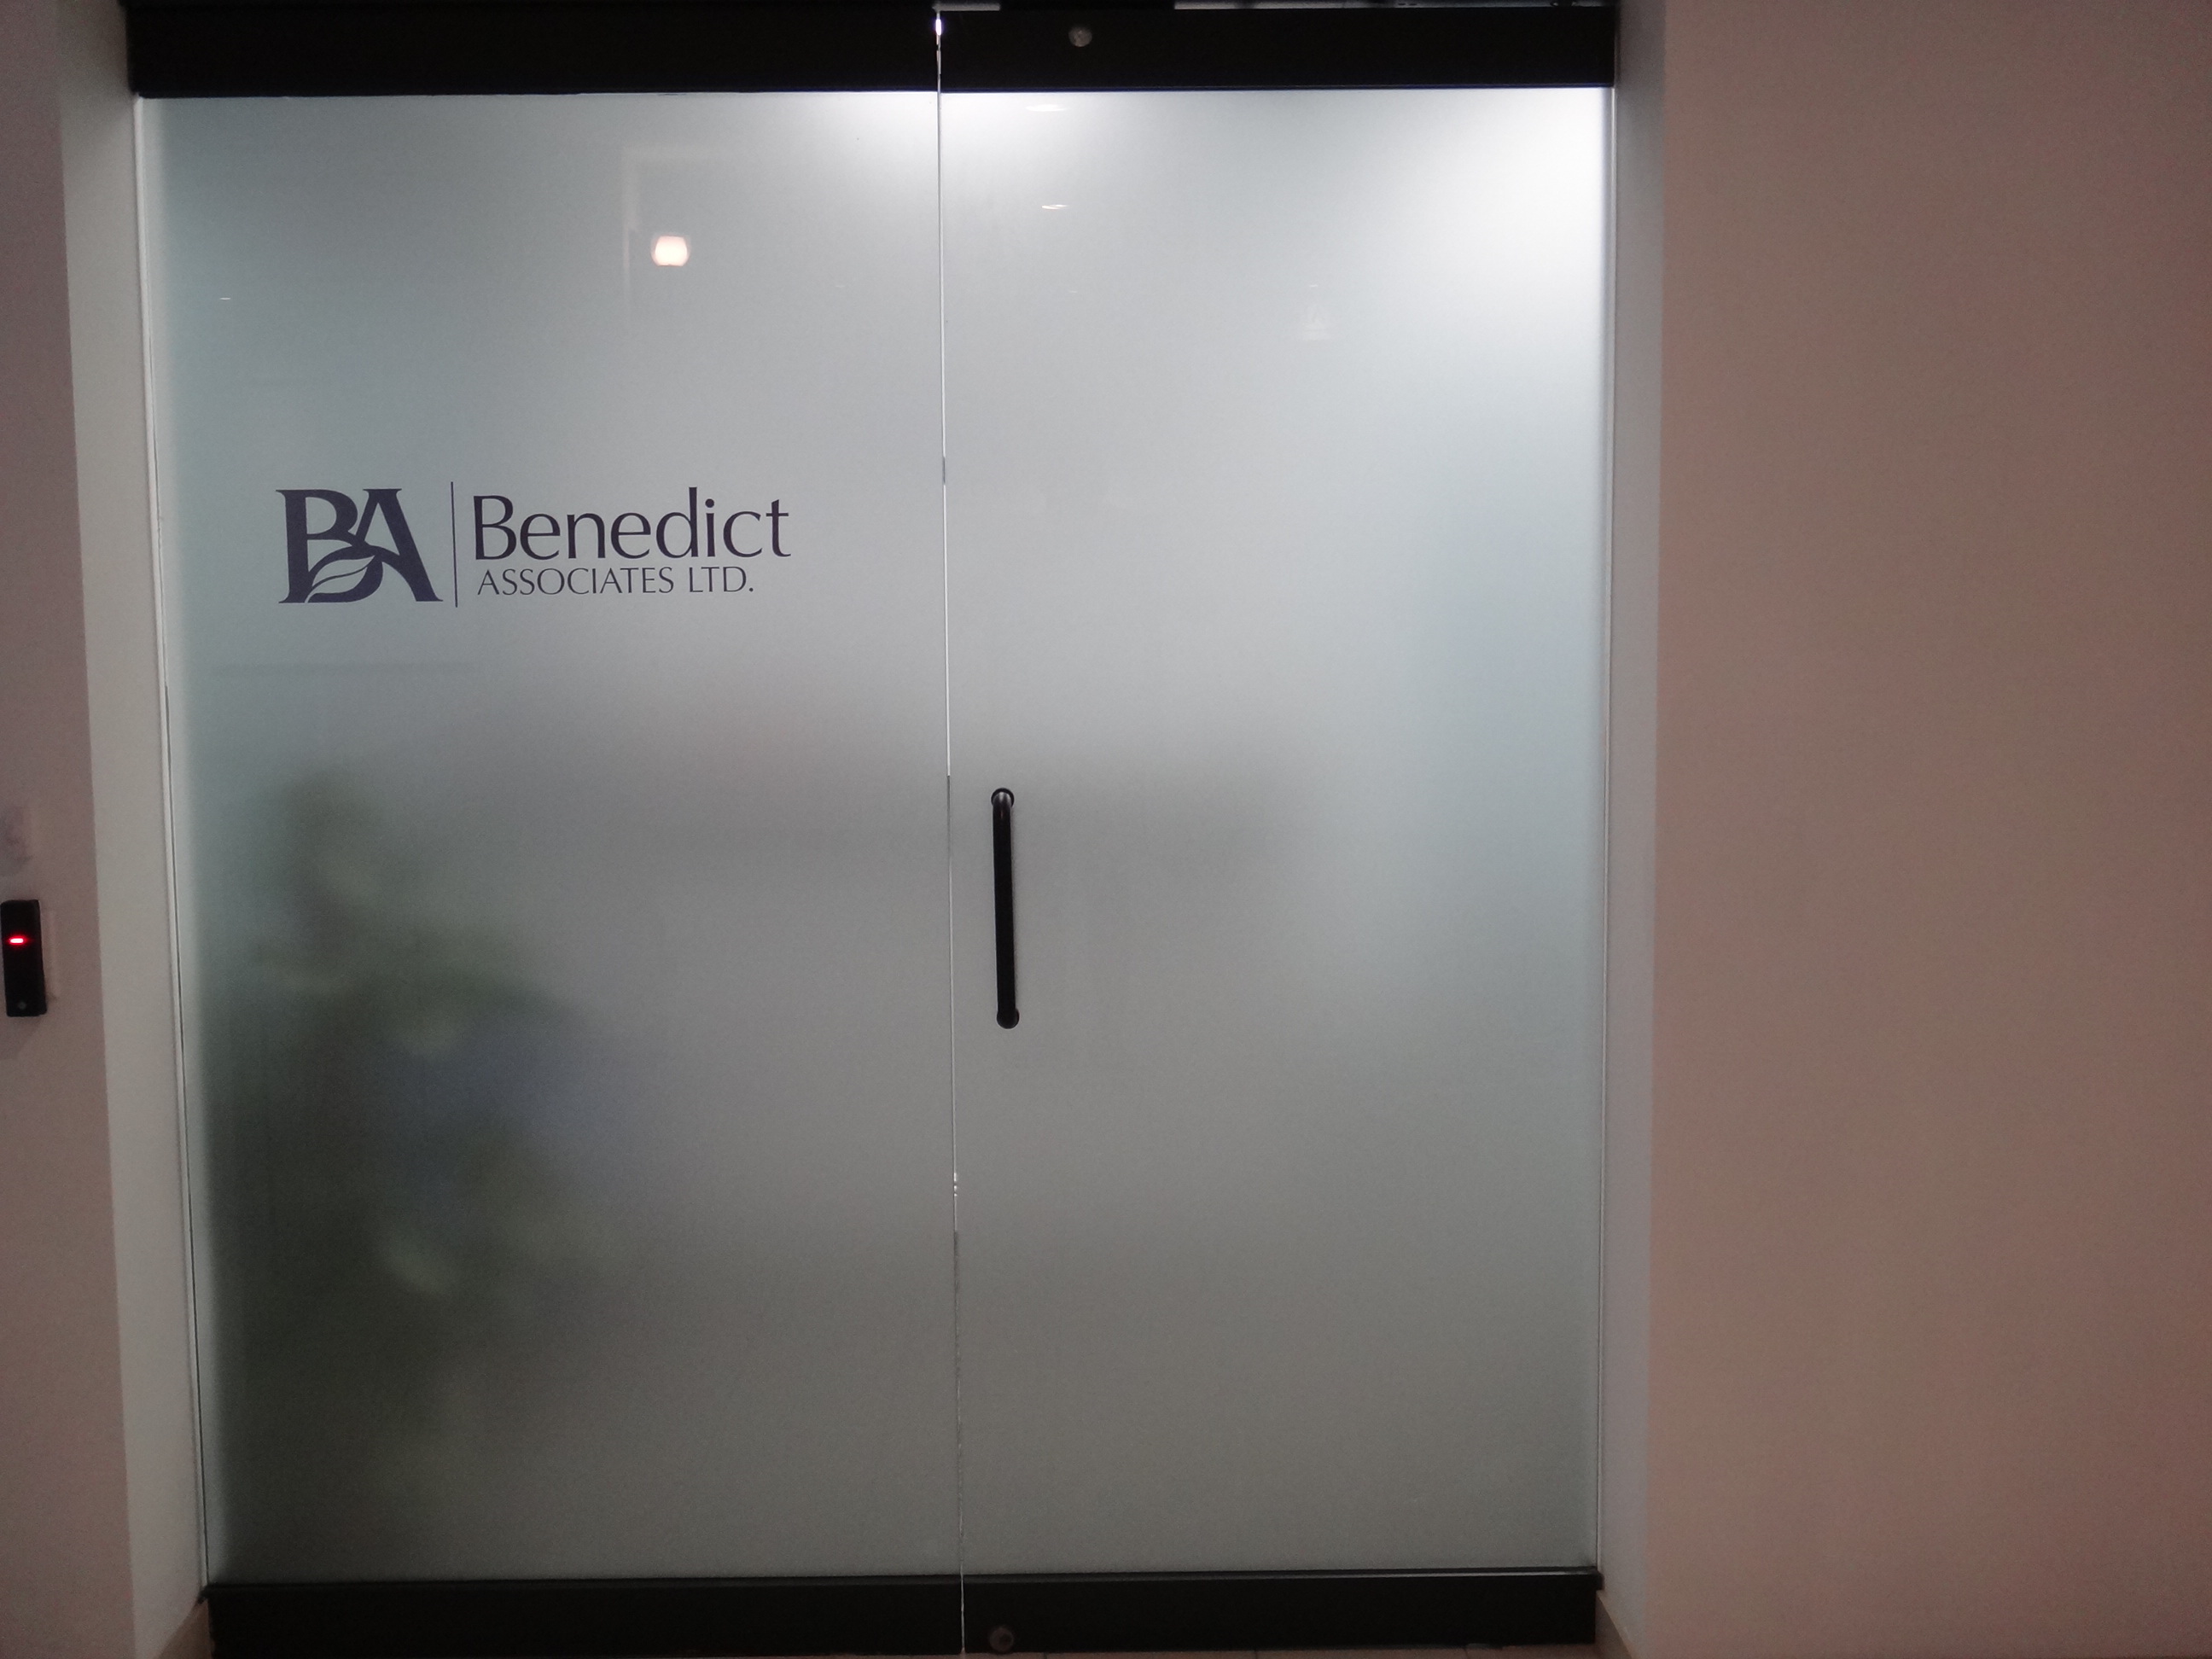 Benedict Associates Ltd